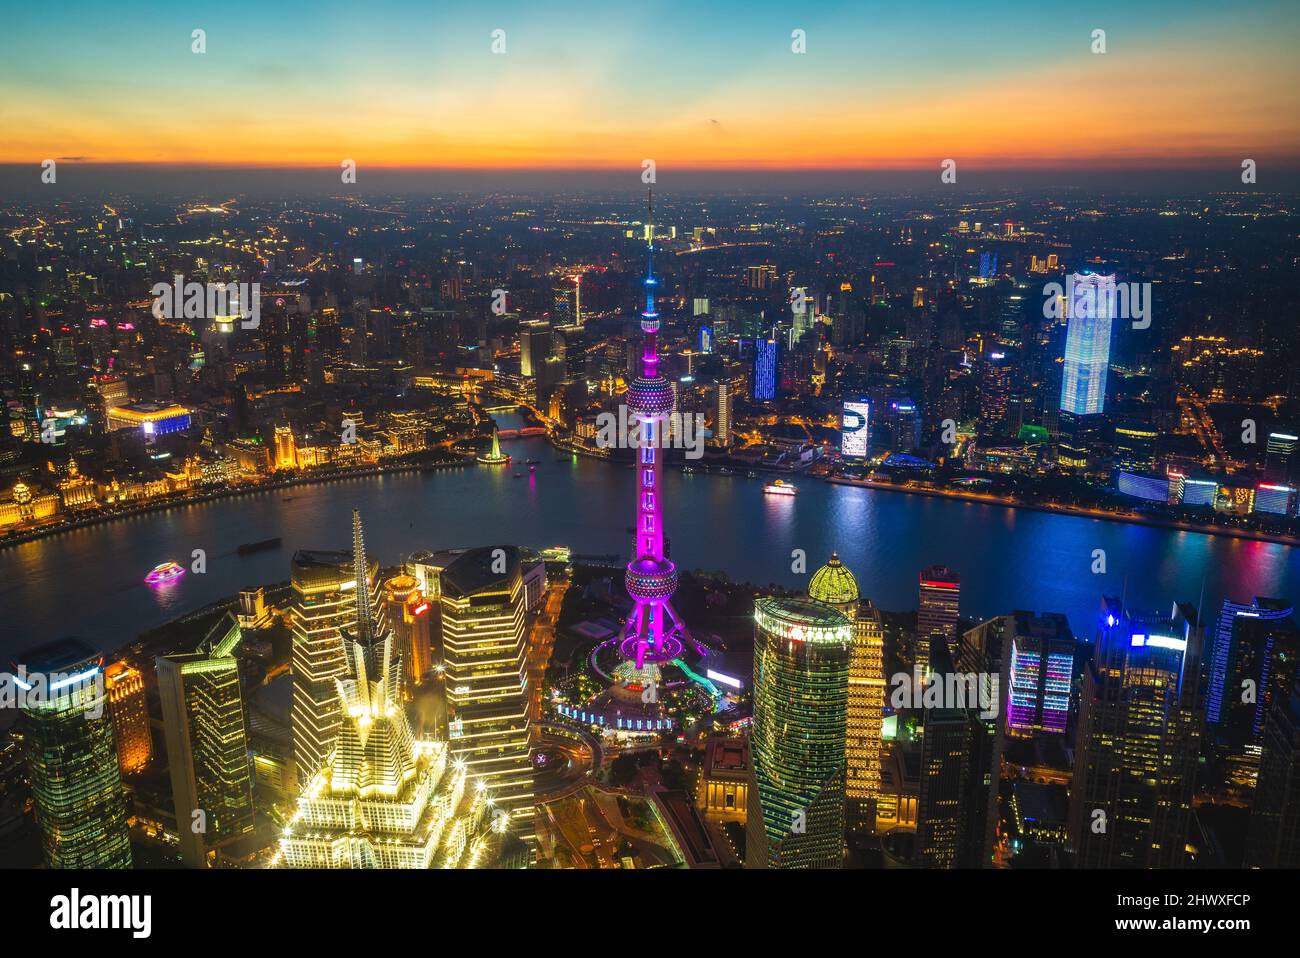 Vista notturna del quartiere Lujiazui della città di Shanghai in cina Foto Stock